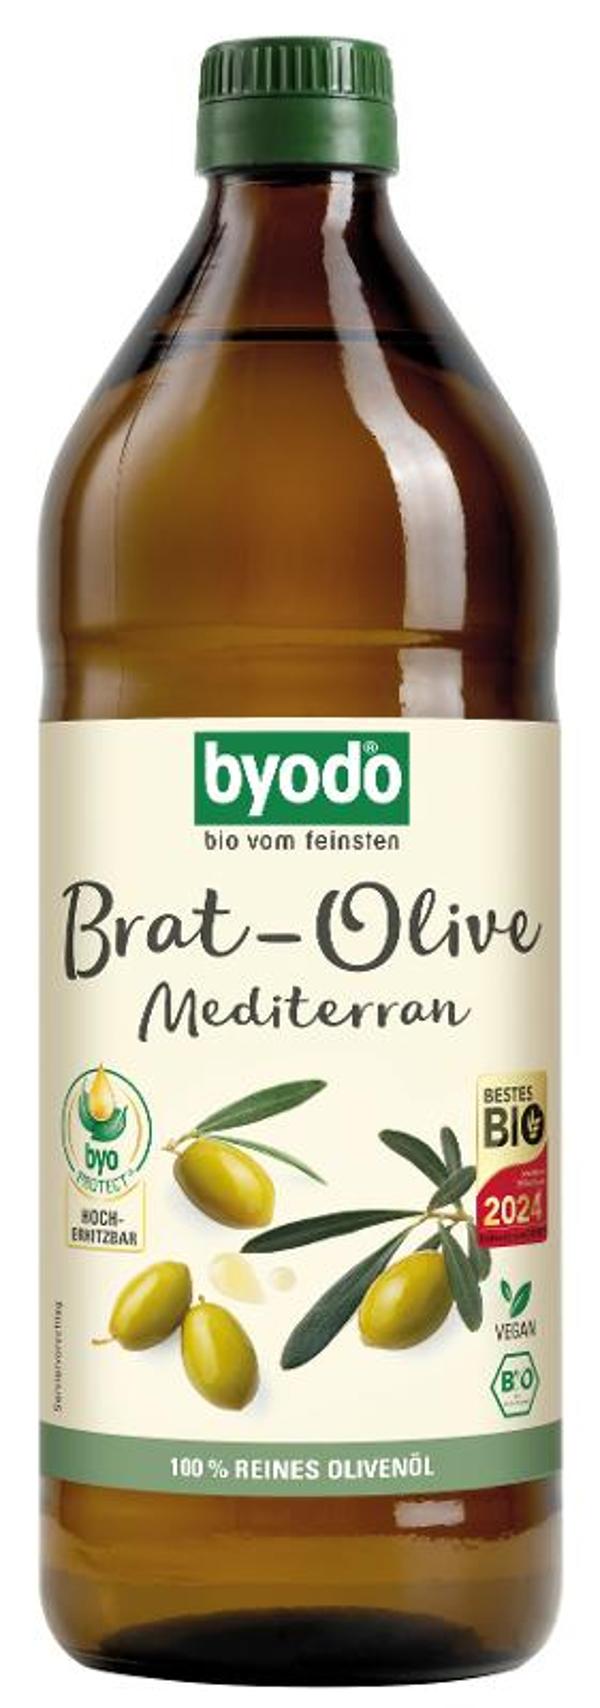 Produktfoto zu Brat-Olivenöl mediterran